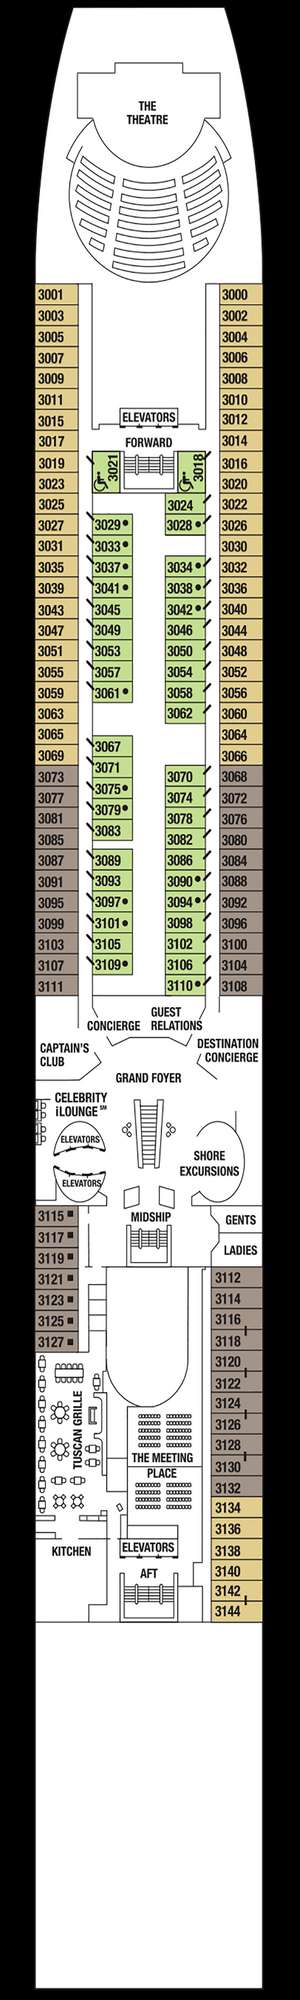 Deck plan for Celebrity Millennium